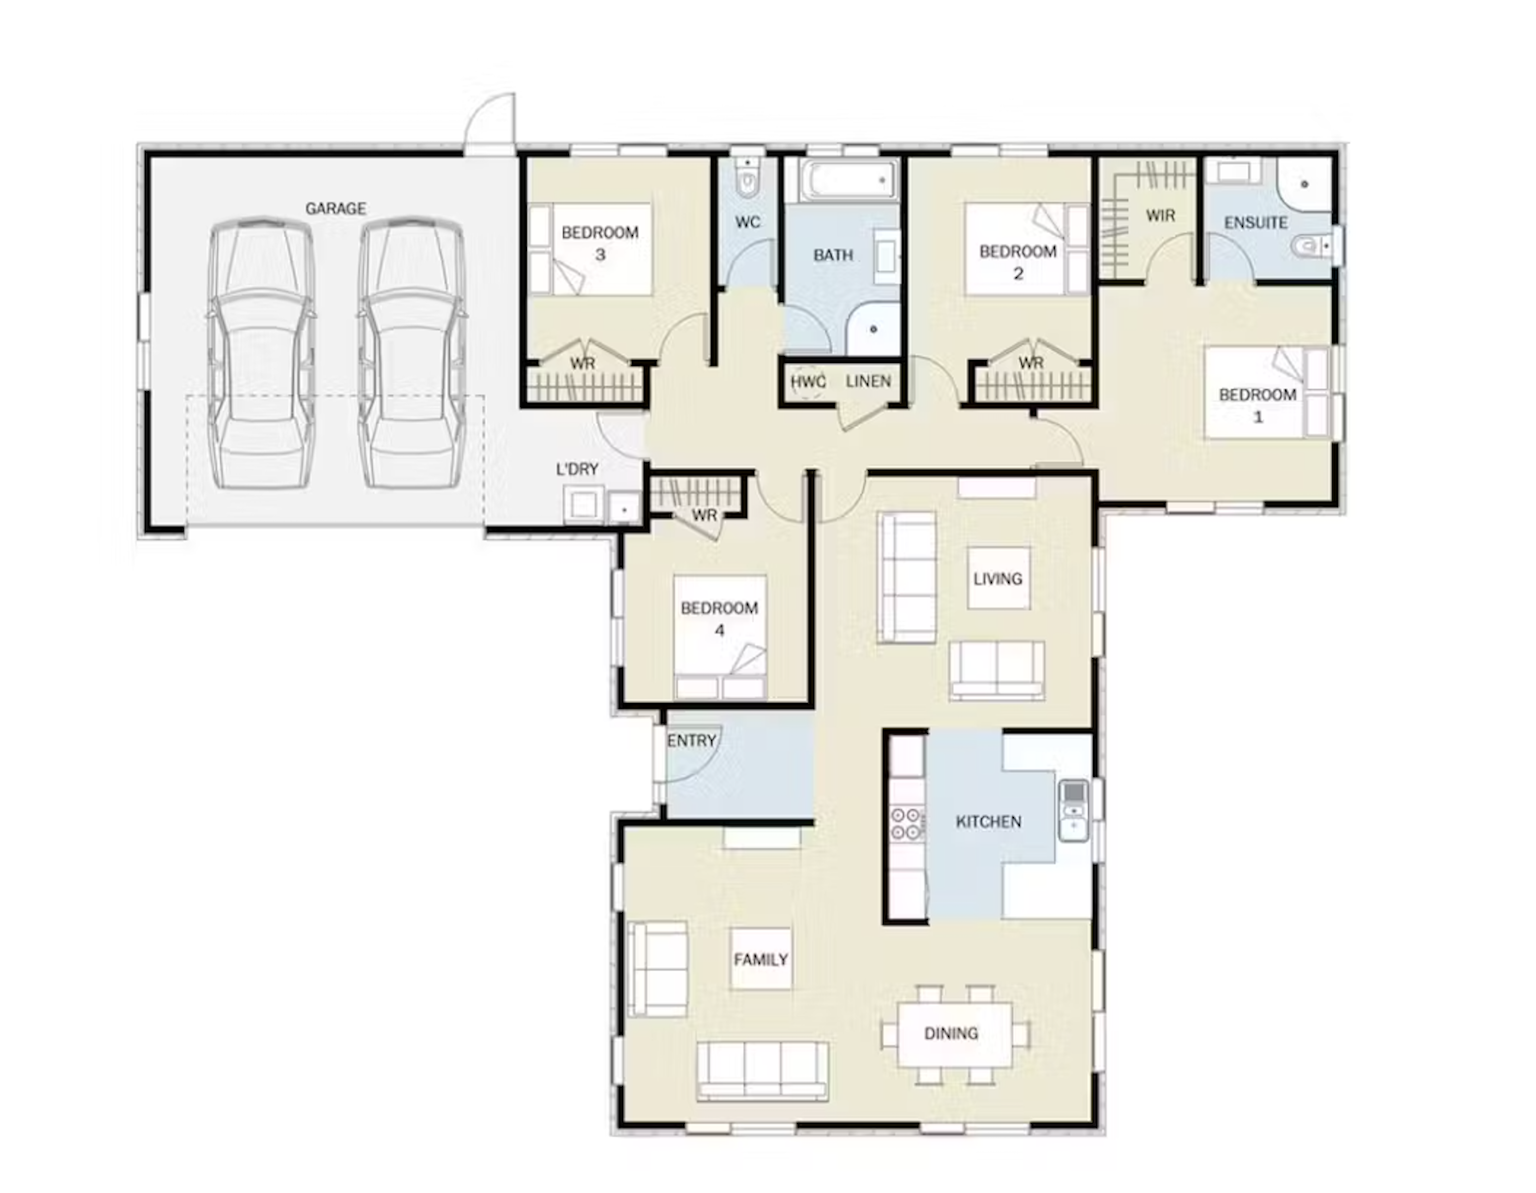 Takahe floor plan